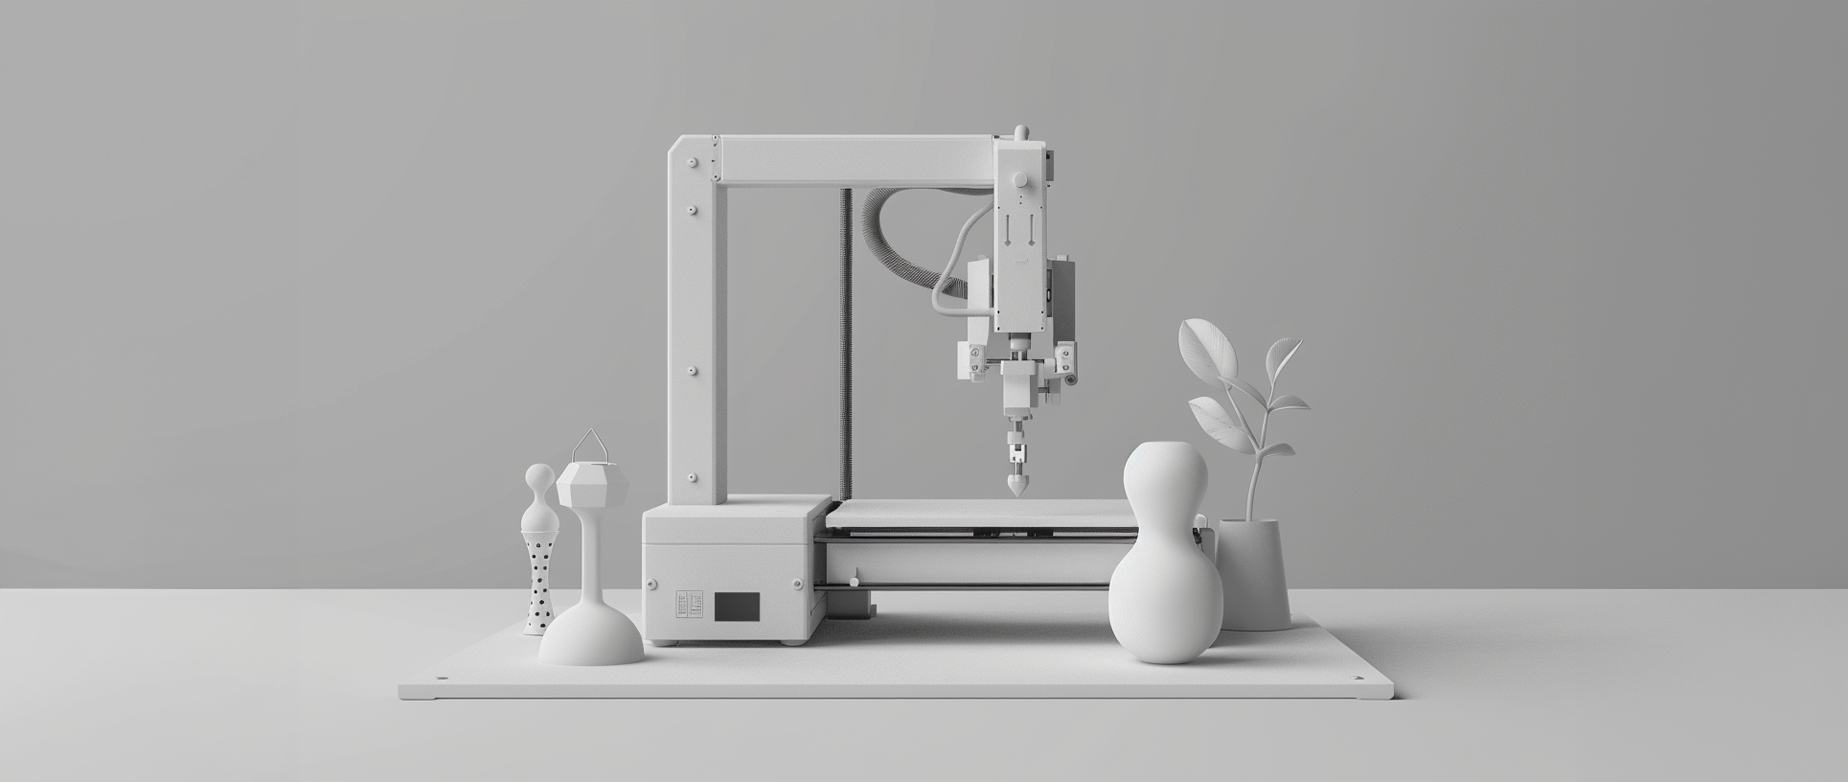 A white 3D printer on a light grey background.